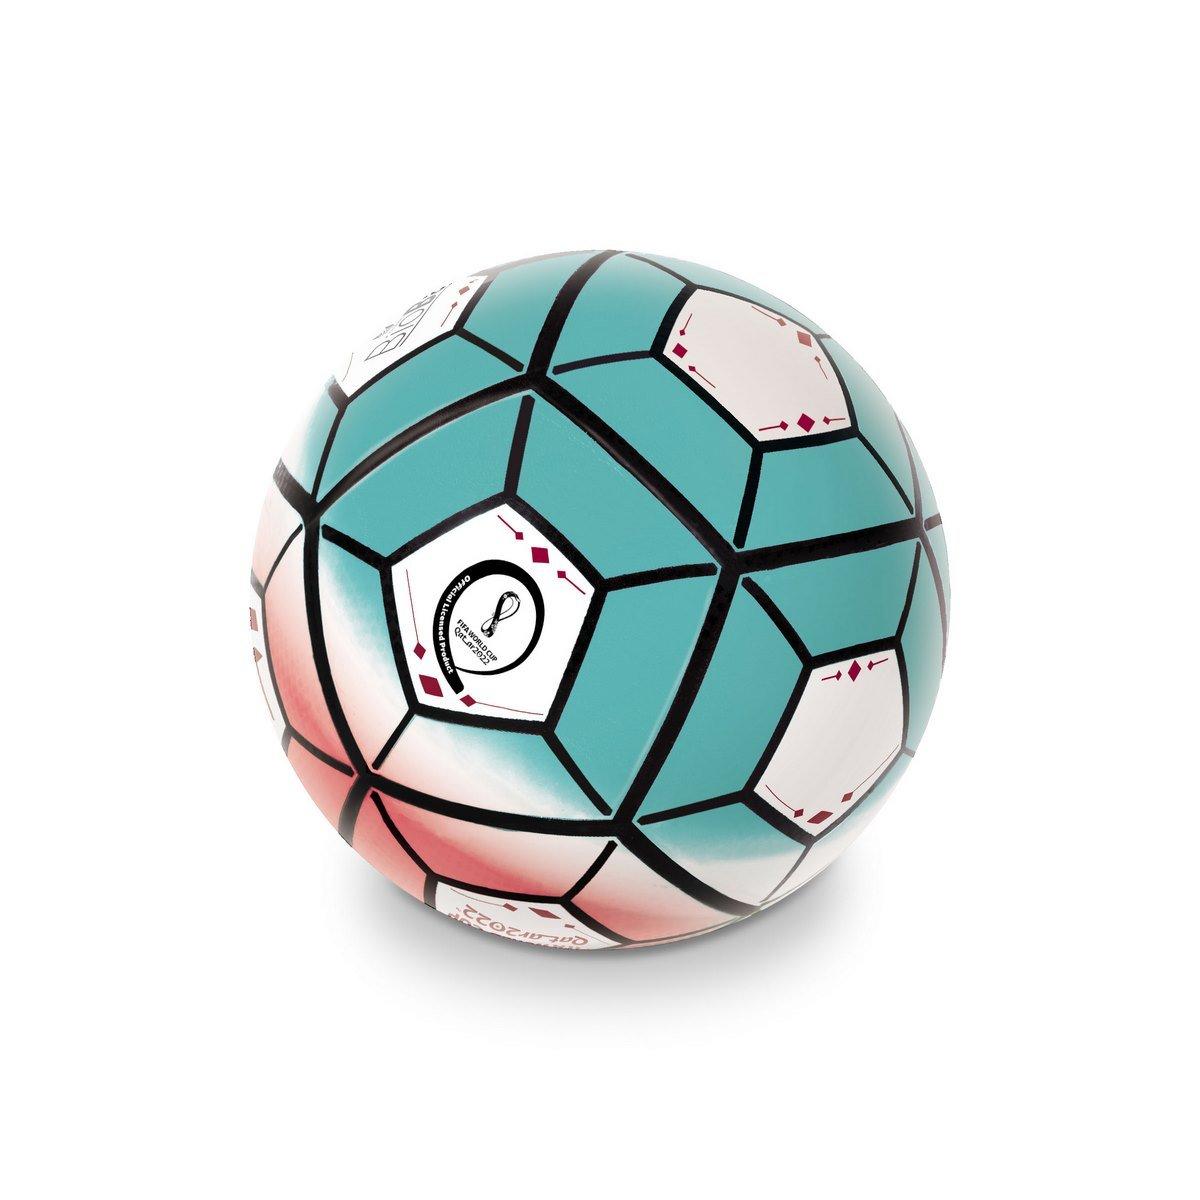 Selected image for UNICE Fudbalska lopta Fifa 2022 Al Bajt